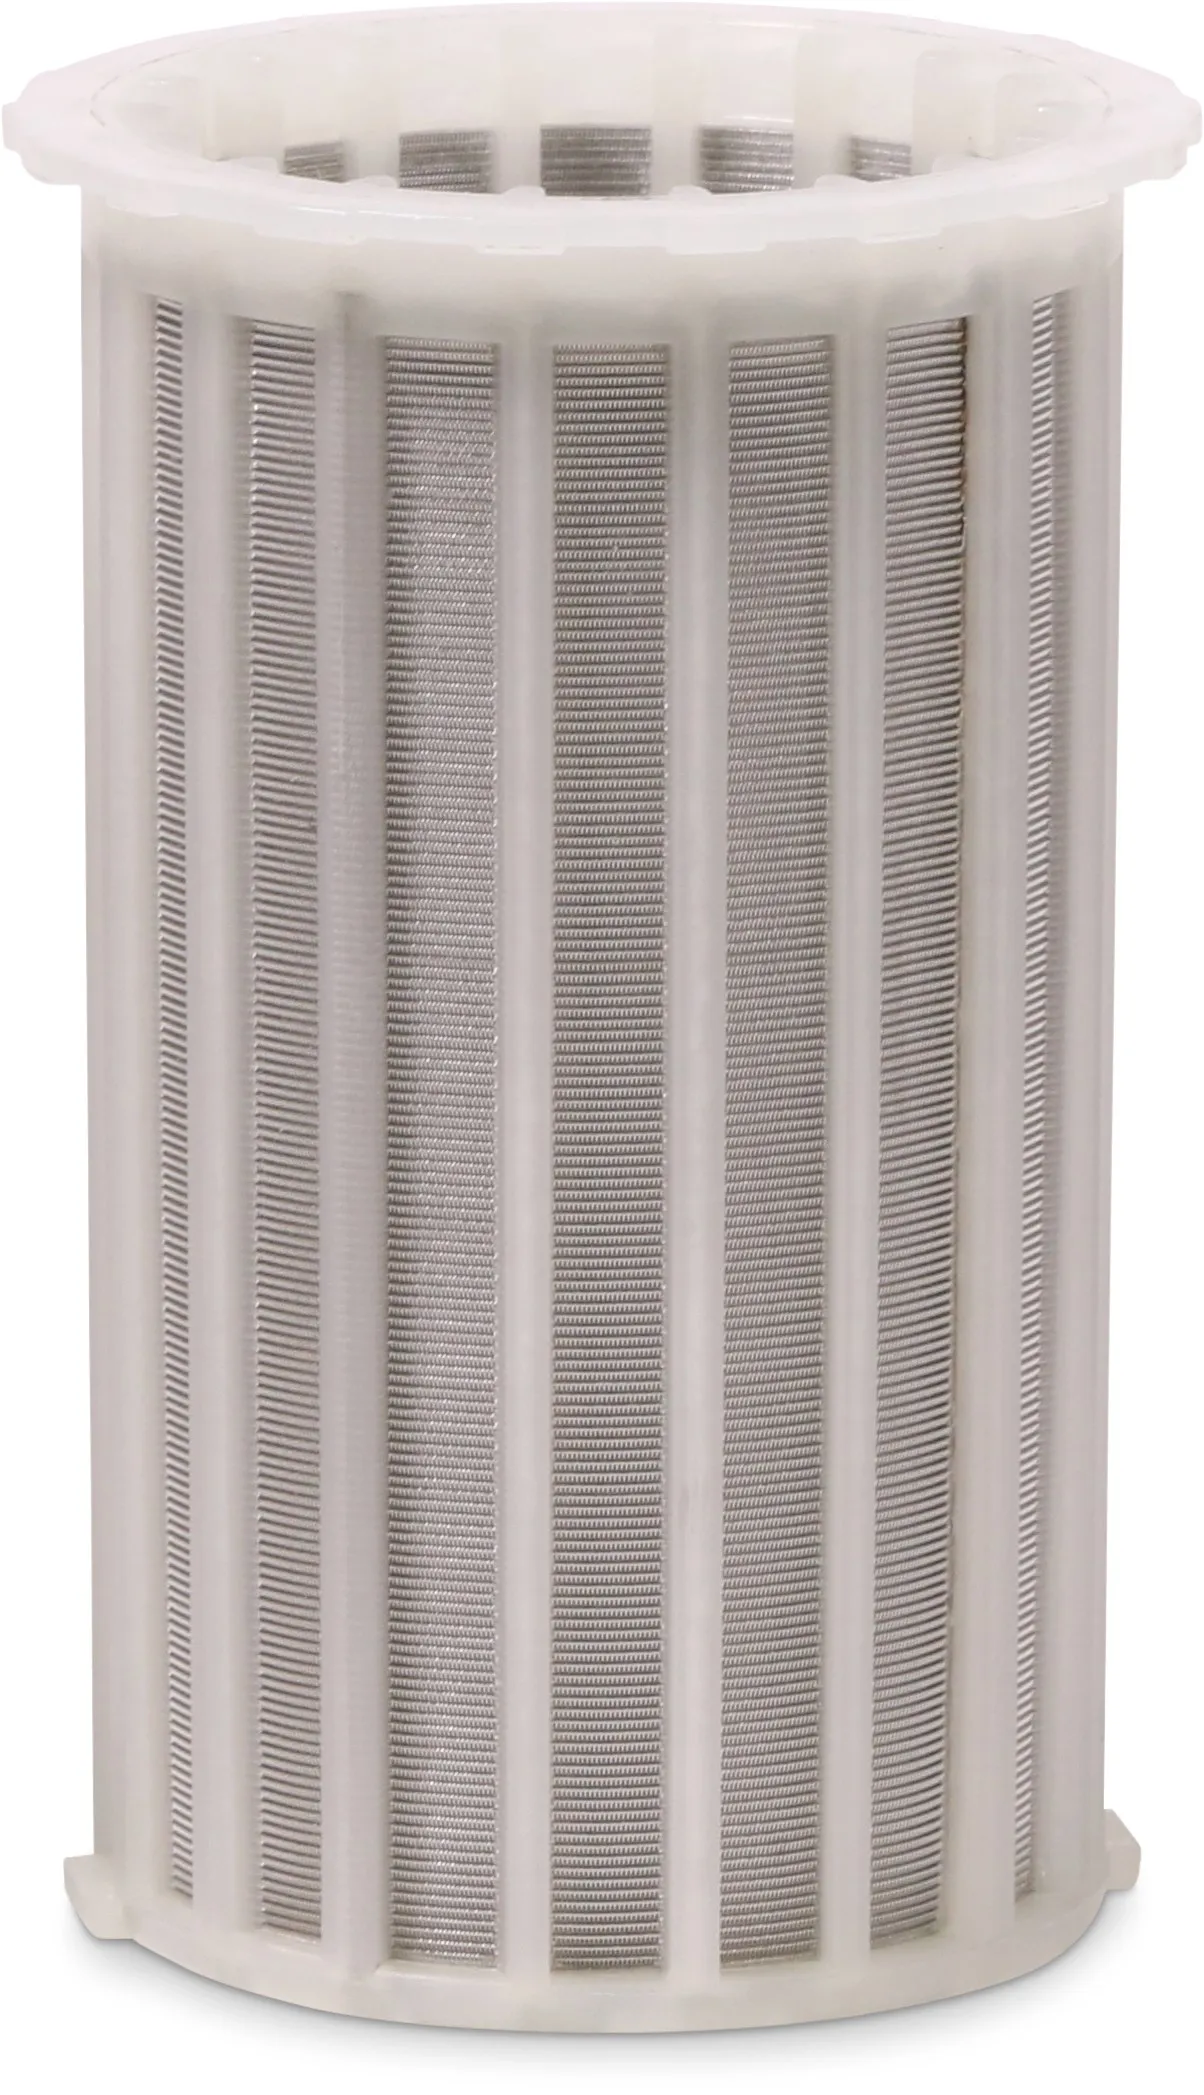 Rain Bird Screen insert 1" 75micron stainless steel gauze type QKCHK-200M basket filter